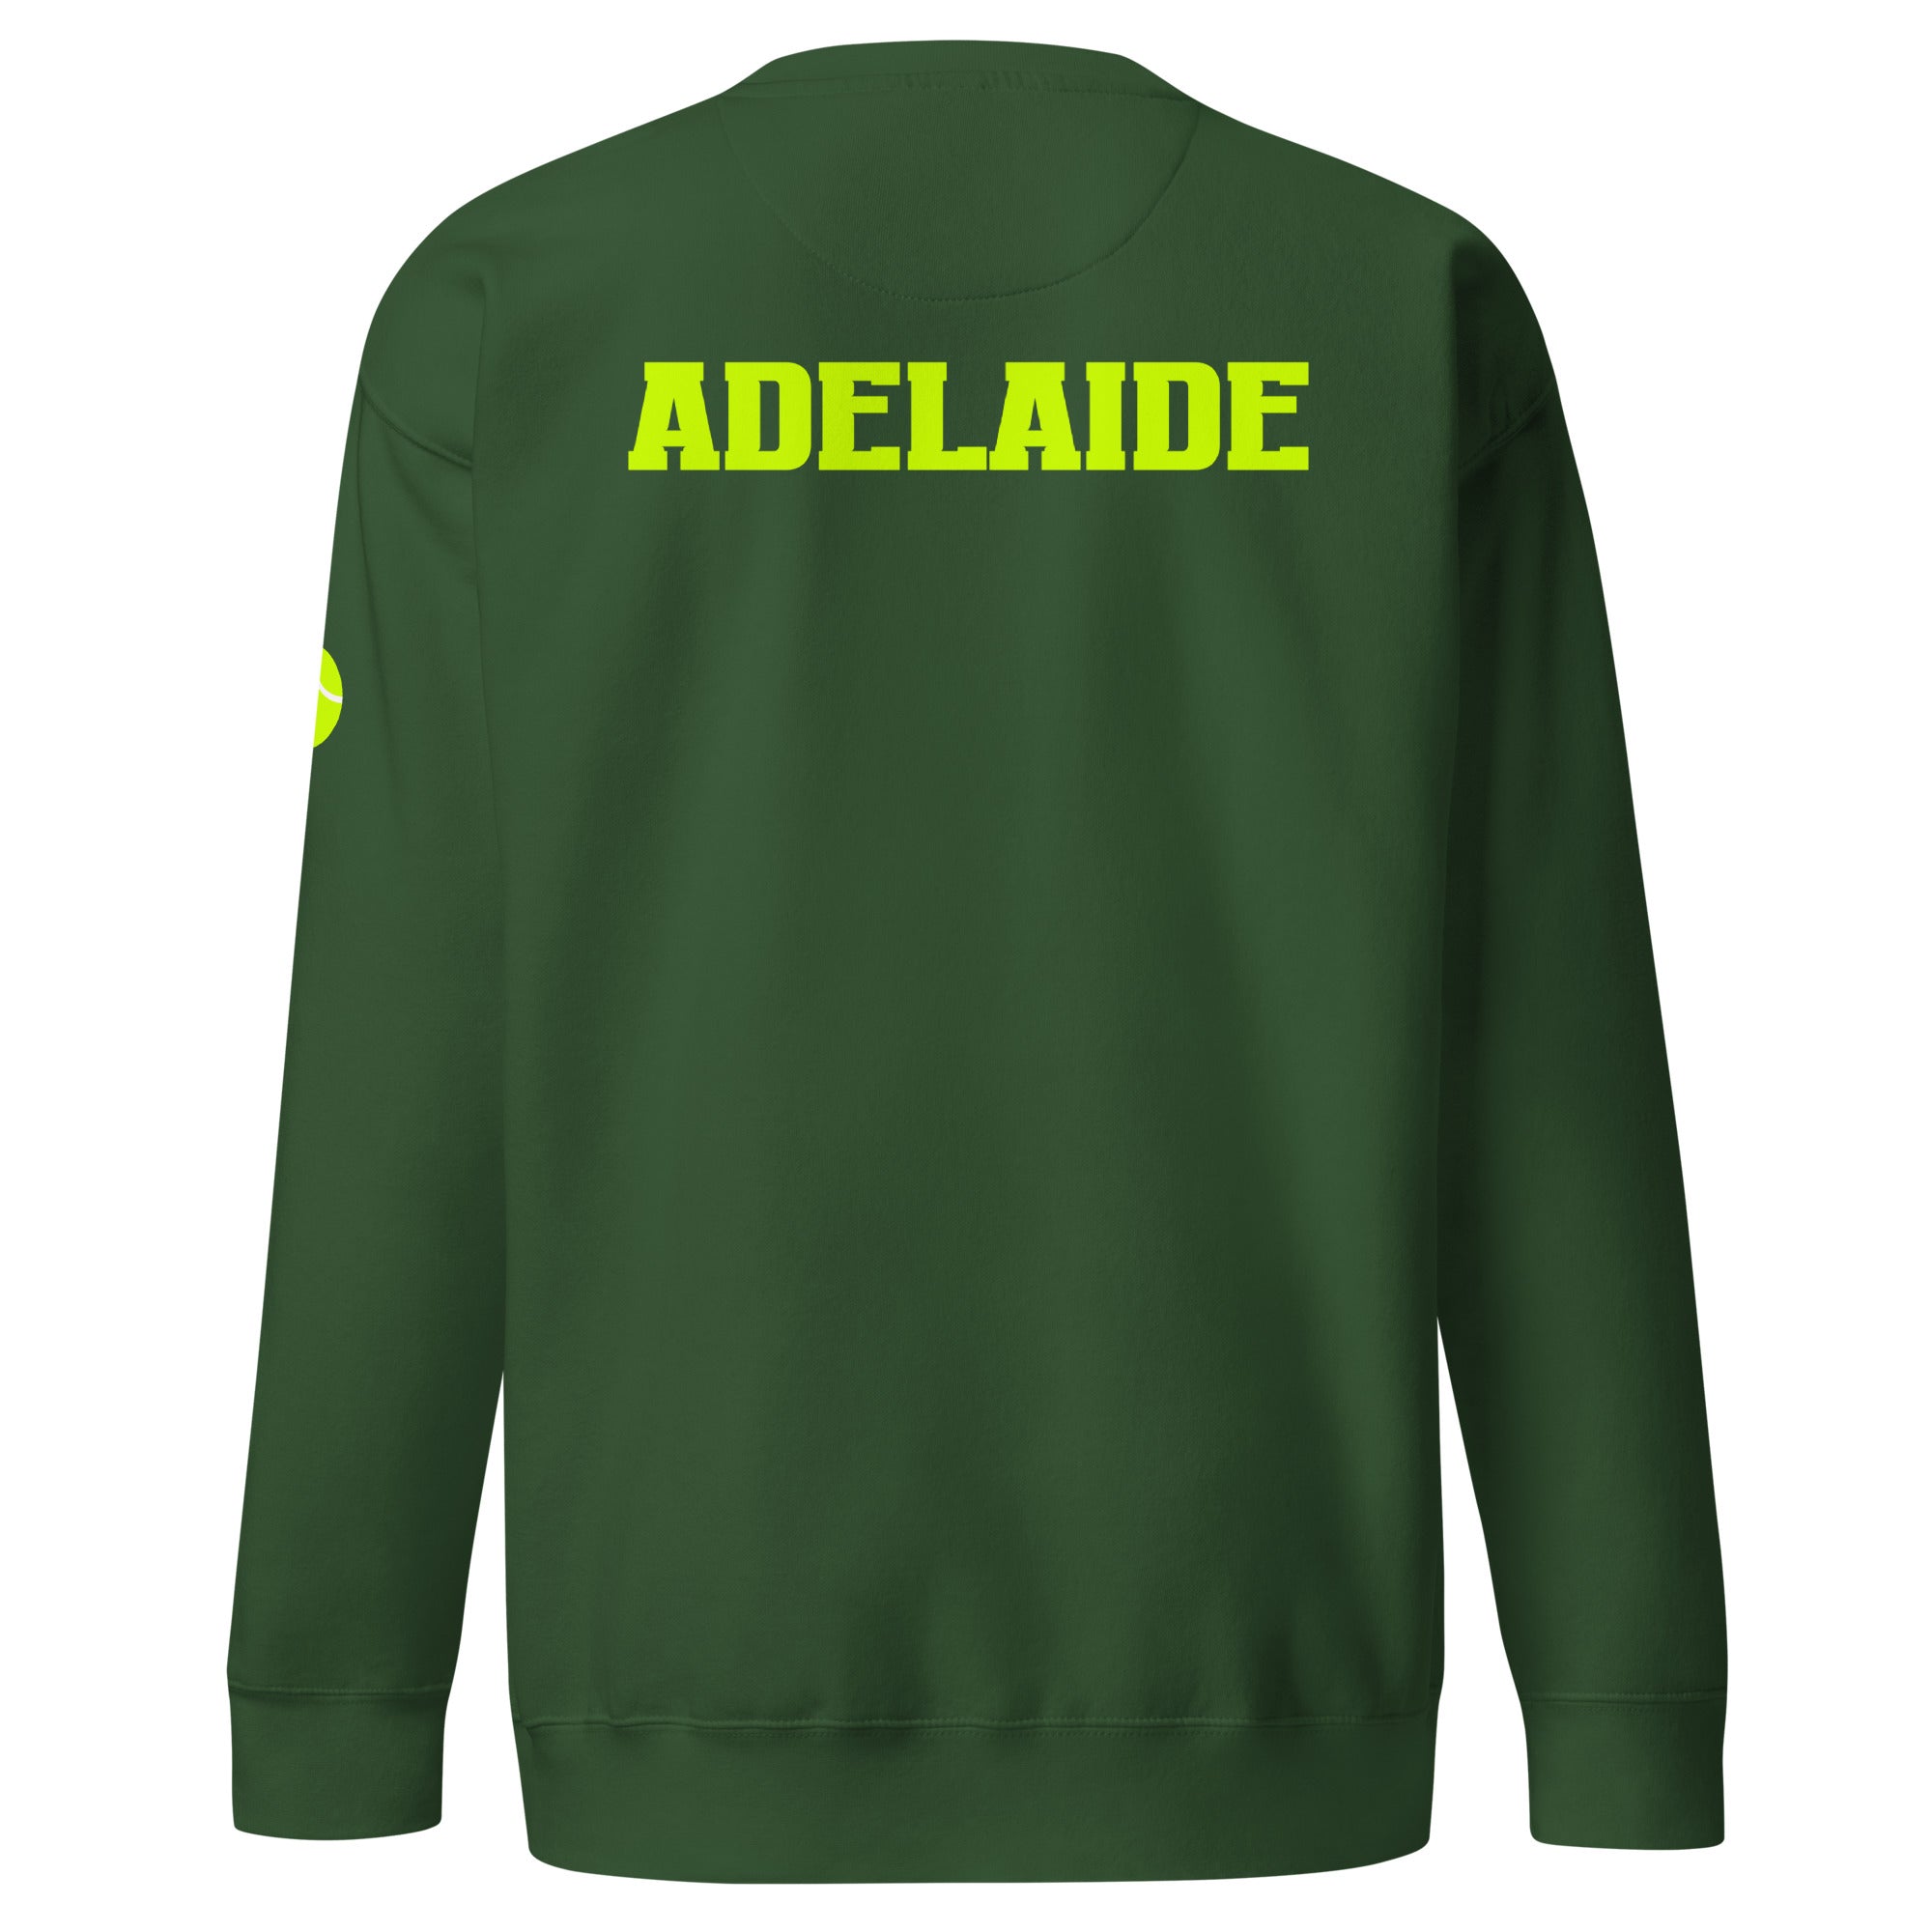 Unisex Premium Sweatshirt - Tennis Masters Adelaide - GRAPHIC T-SHIRTS